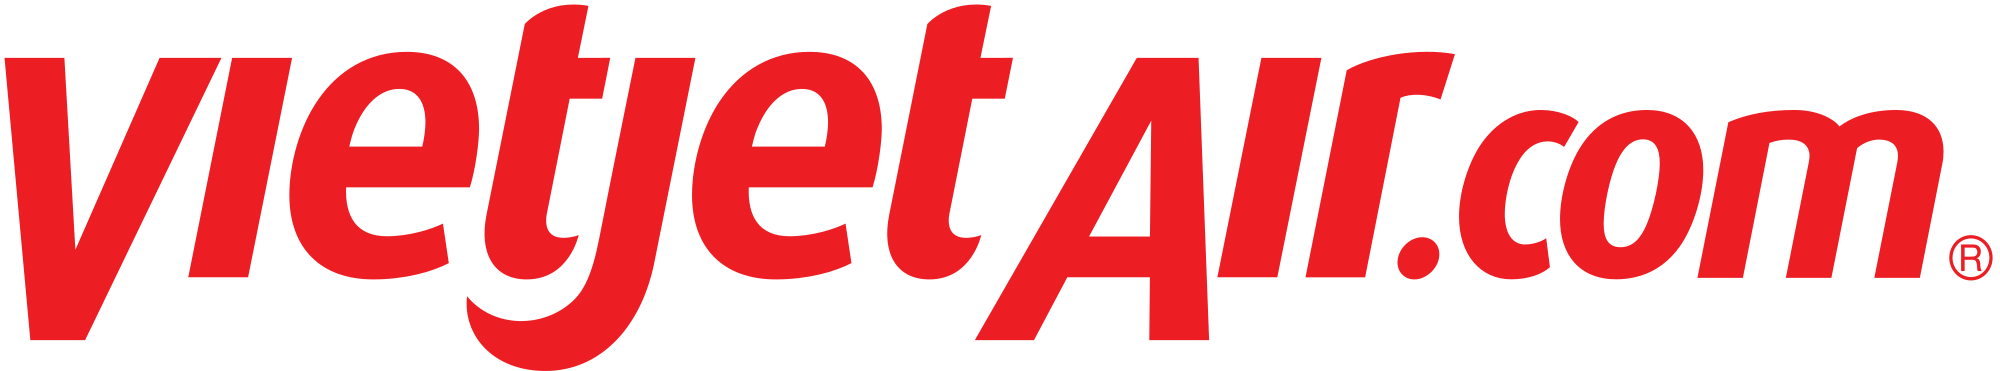 Logo Vietjet Air PNG - 98155